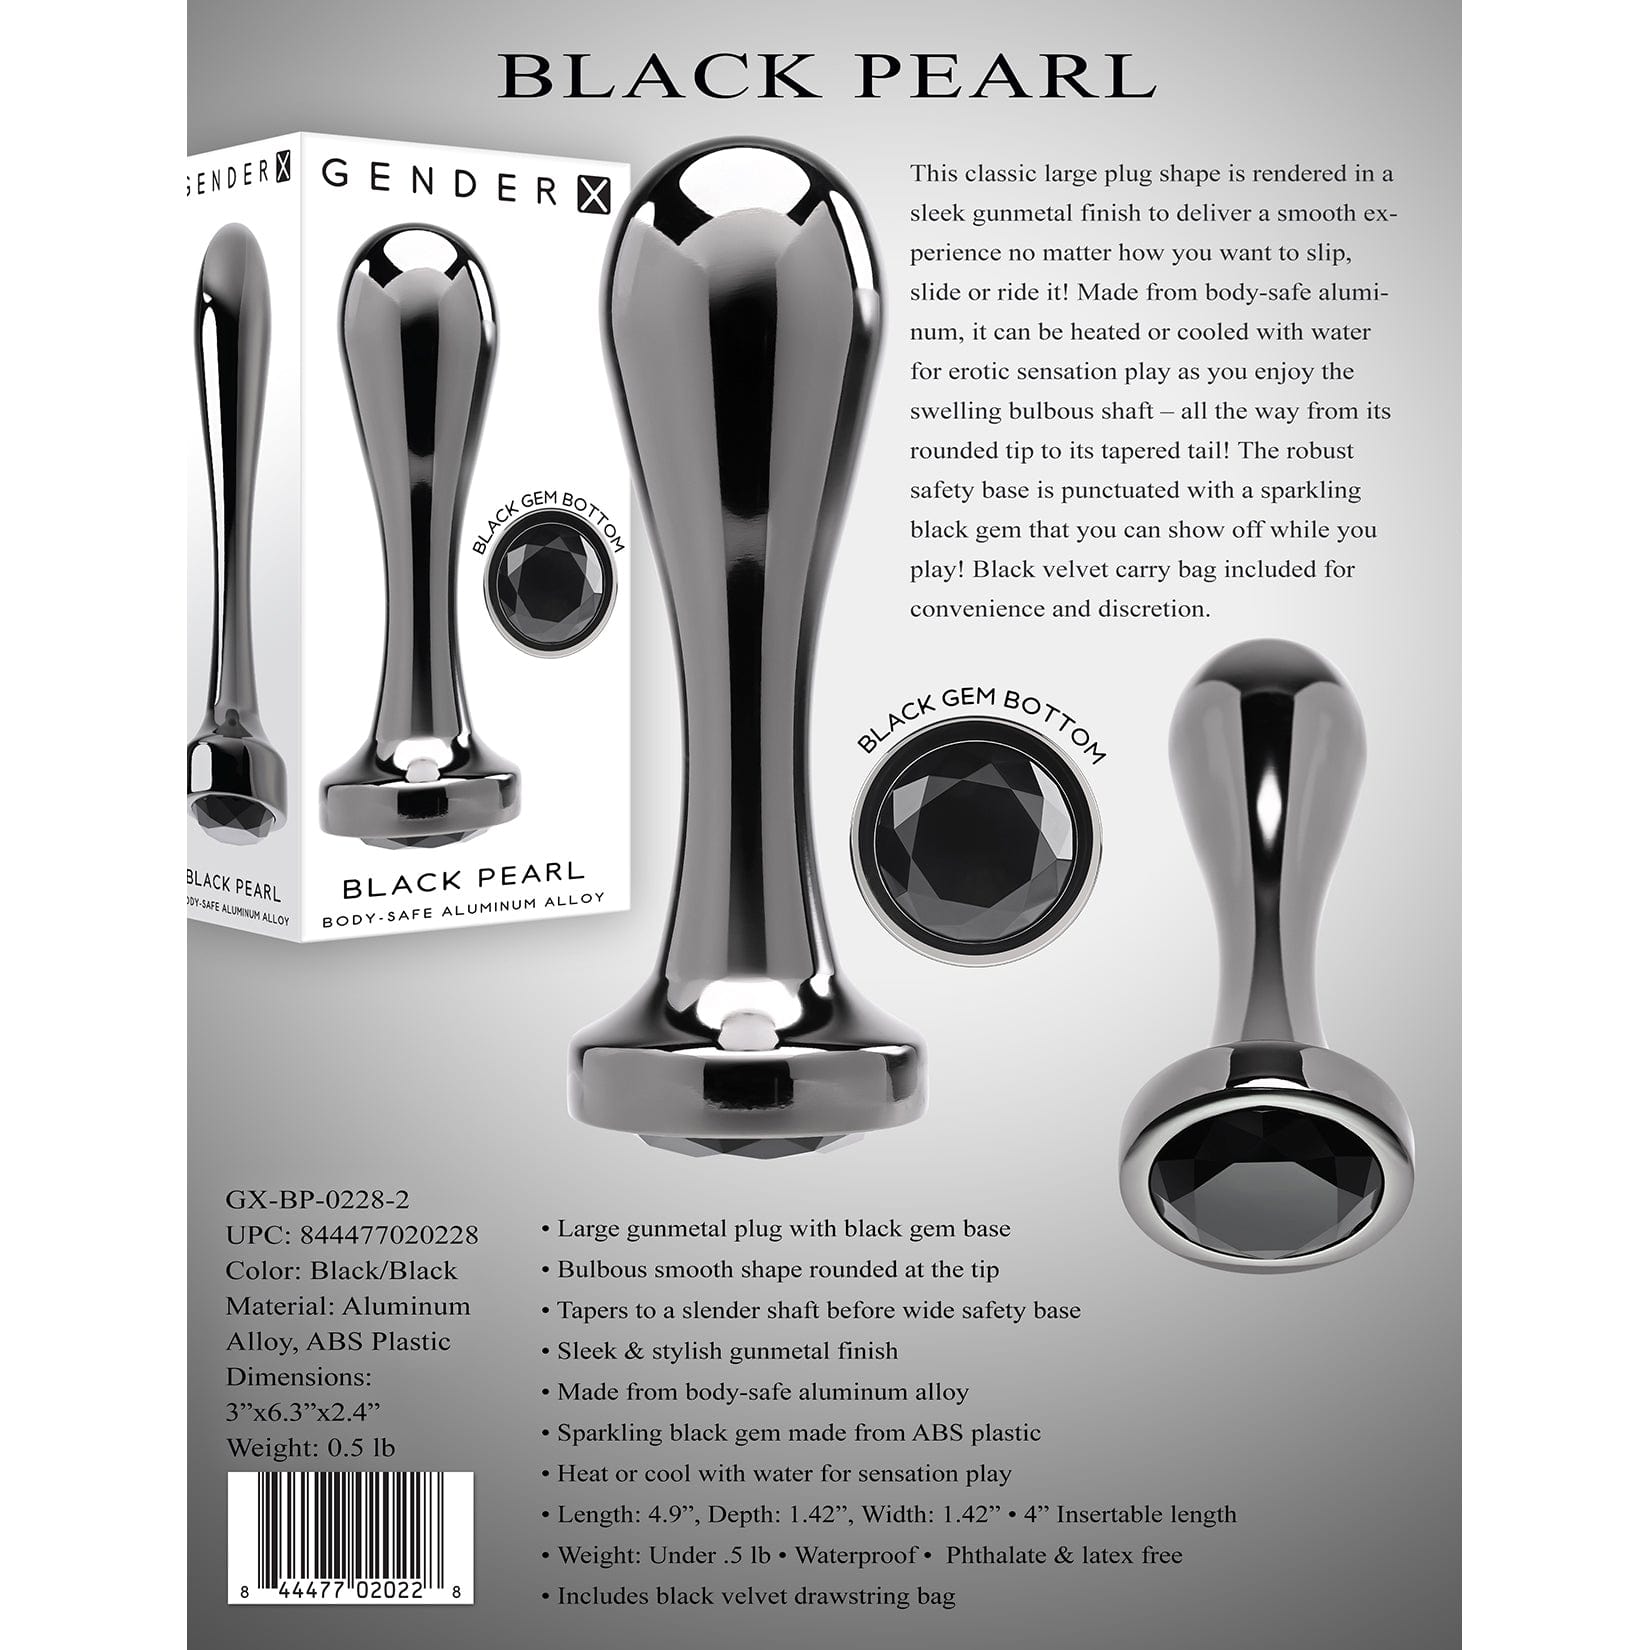 Evolved - Gender X Black Pearl Vibrating Anal Plug (Black) -  Anal Plug (Vibration) Rechargeable  Durio.sg